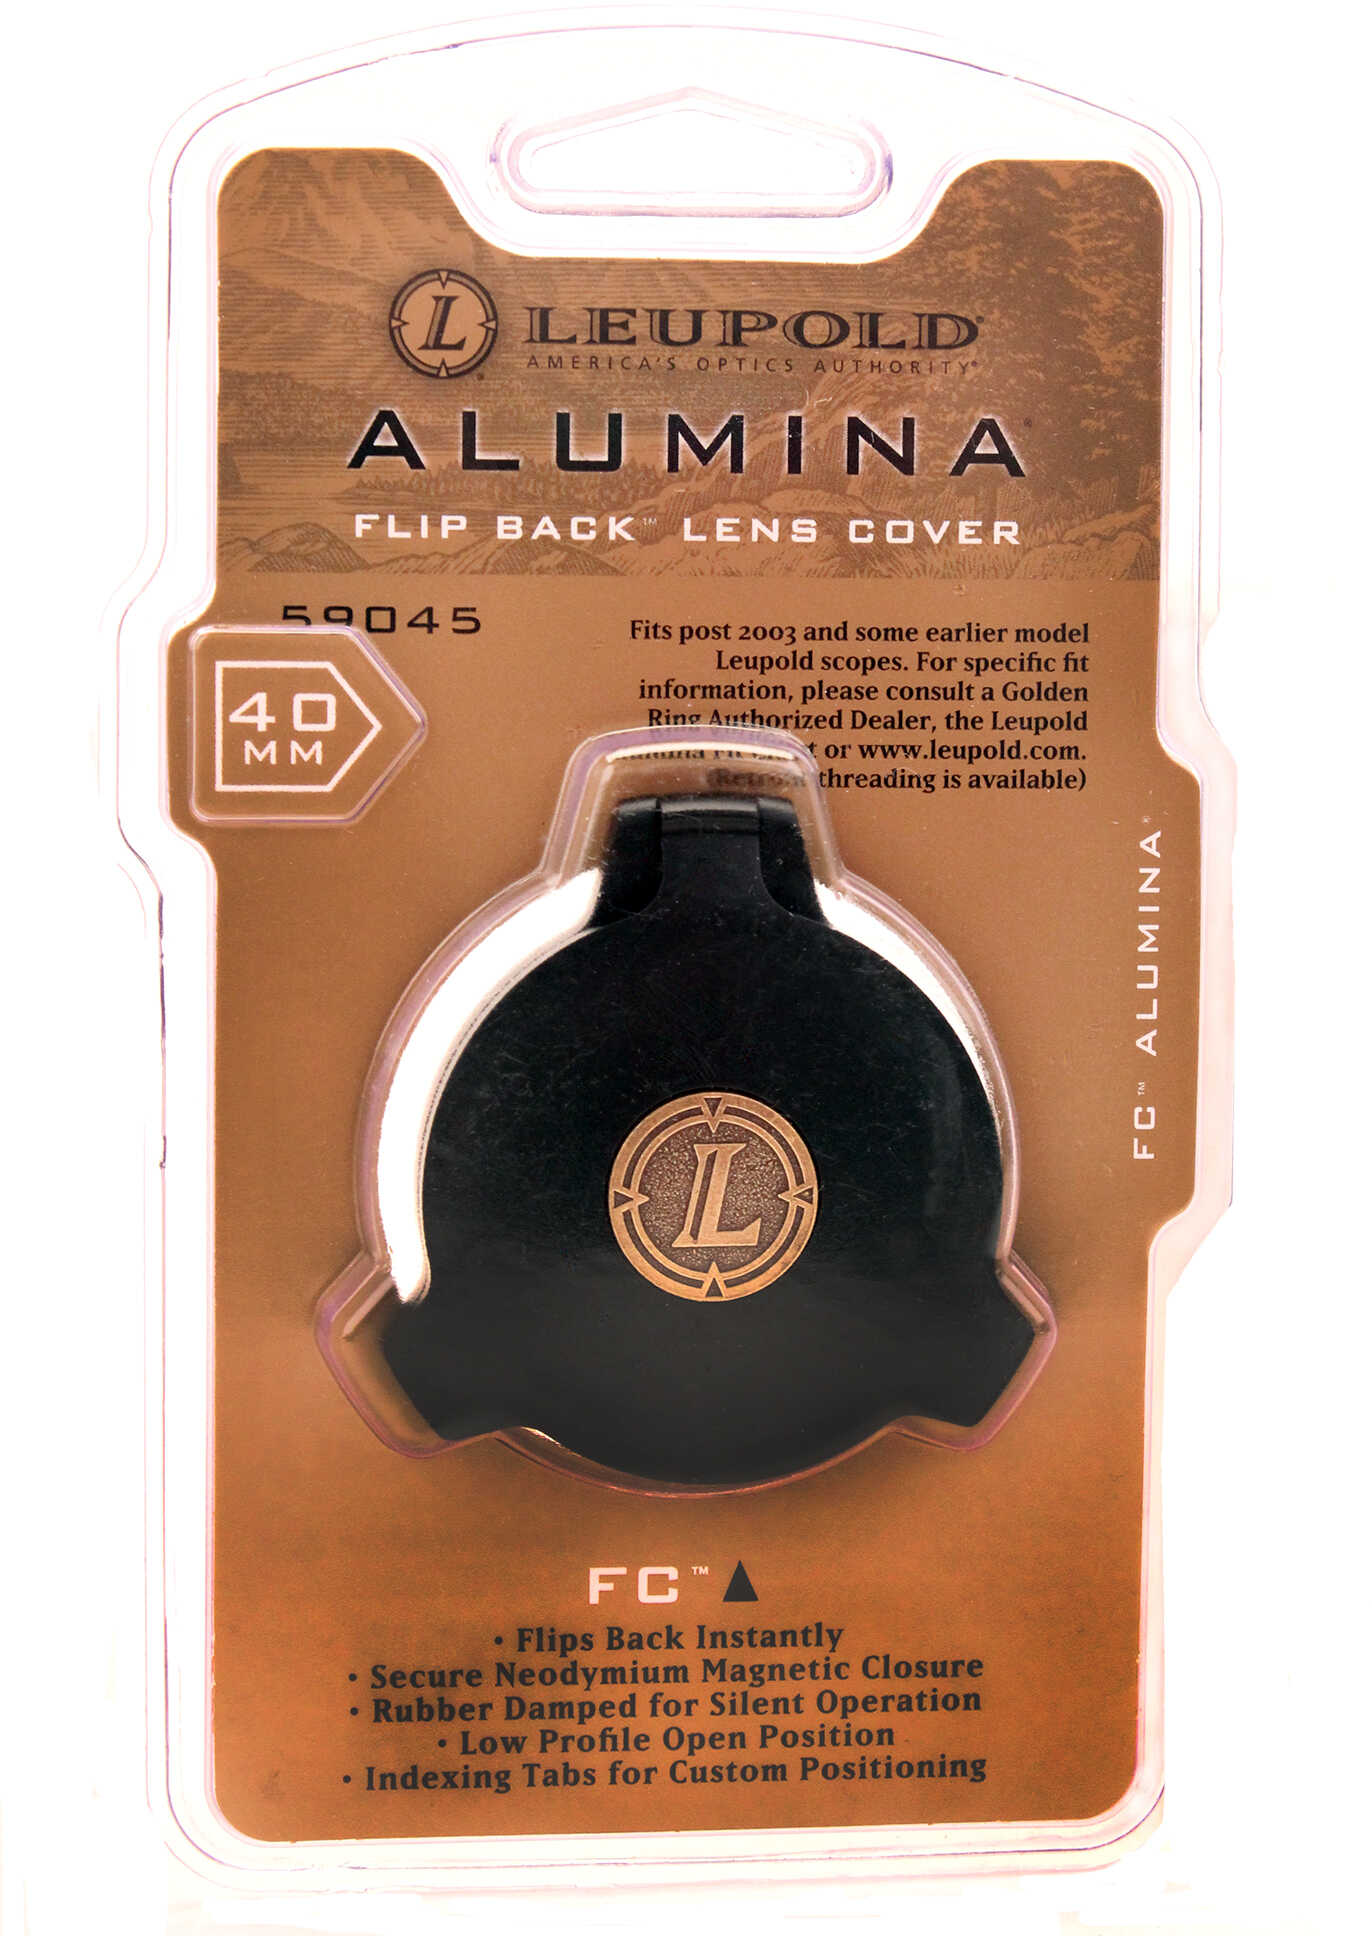 Leupold Alumina Flip Back Lens Cover 40mm Post 2004 Scopes